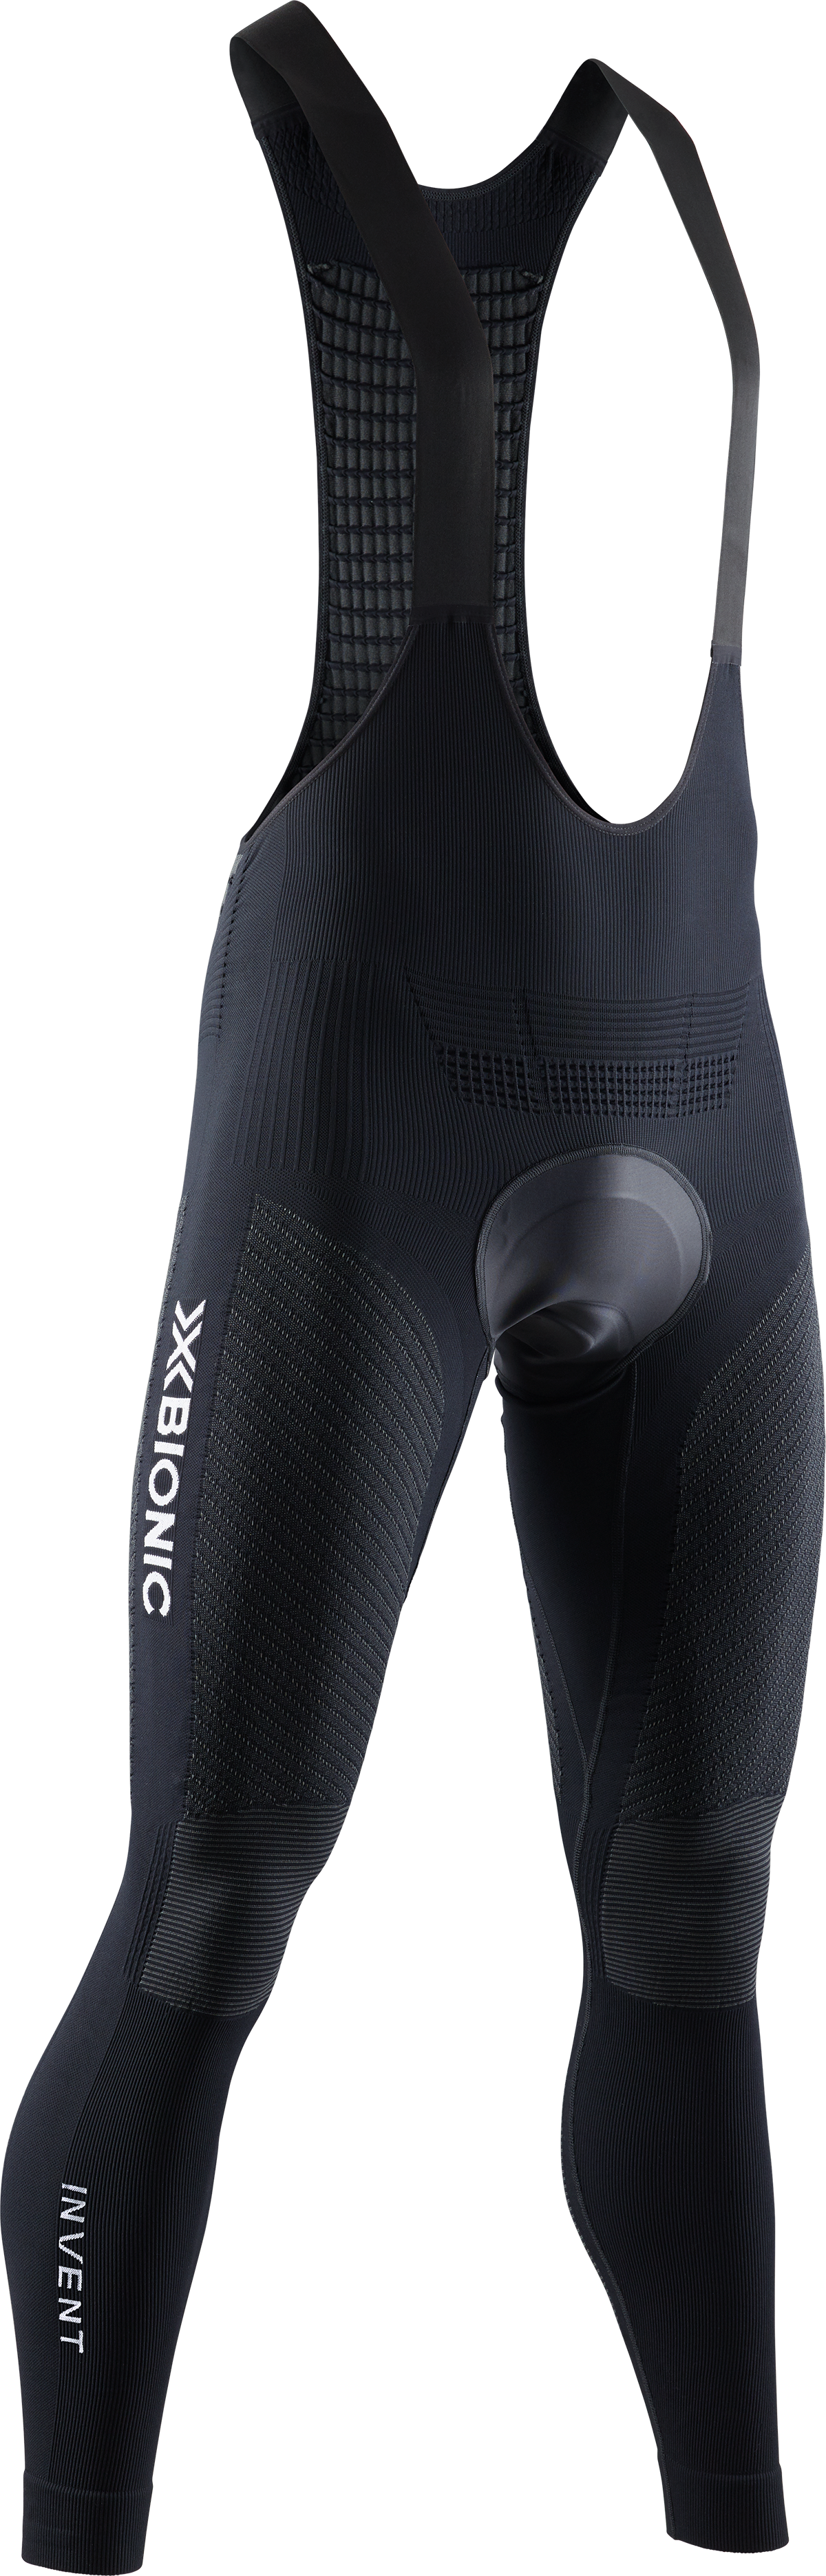 X-BIONIC® INVENT 4.0 CYCLING BIB PANTS MEN